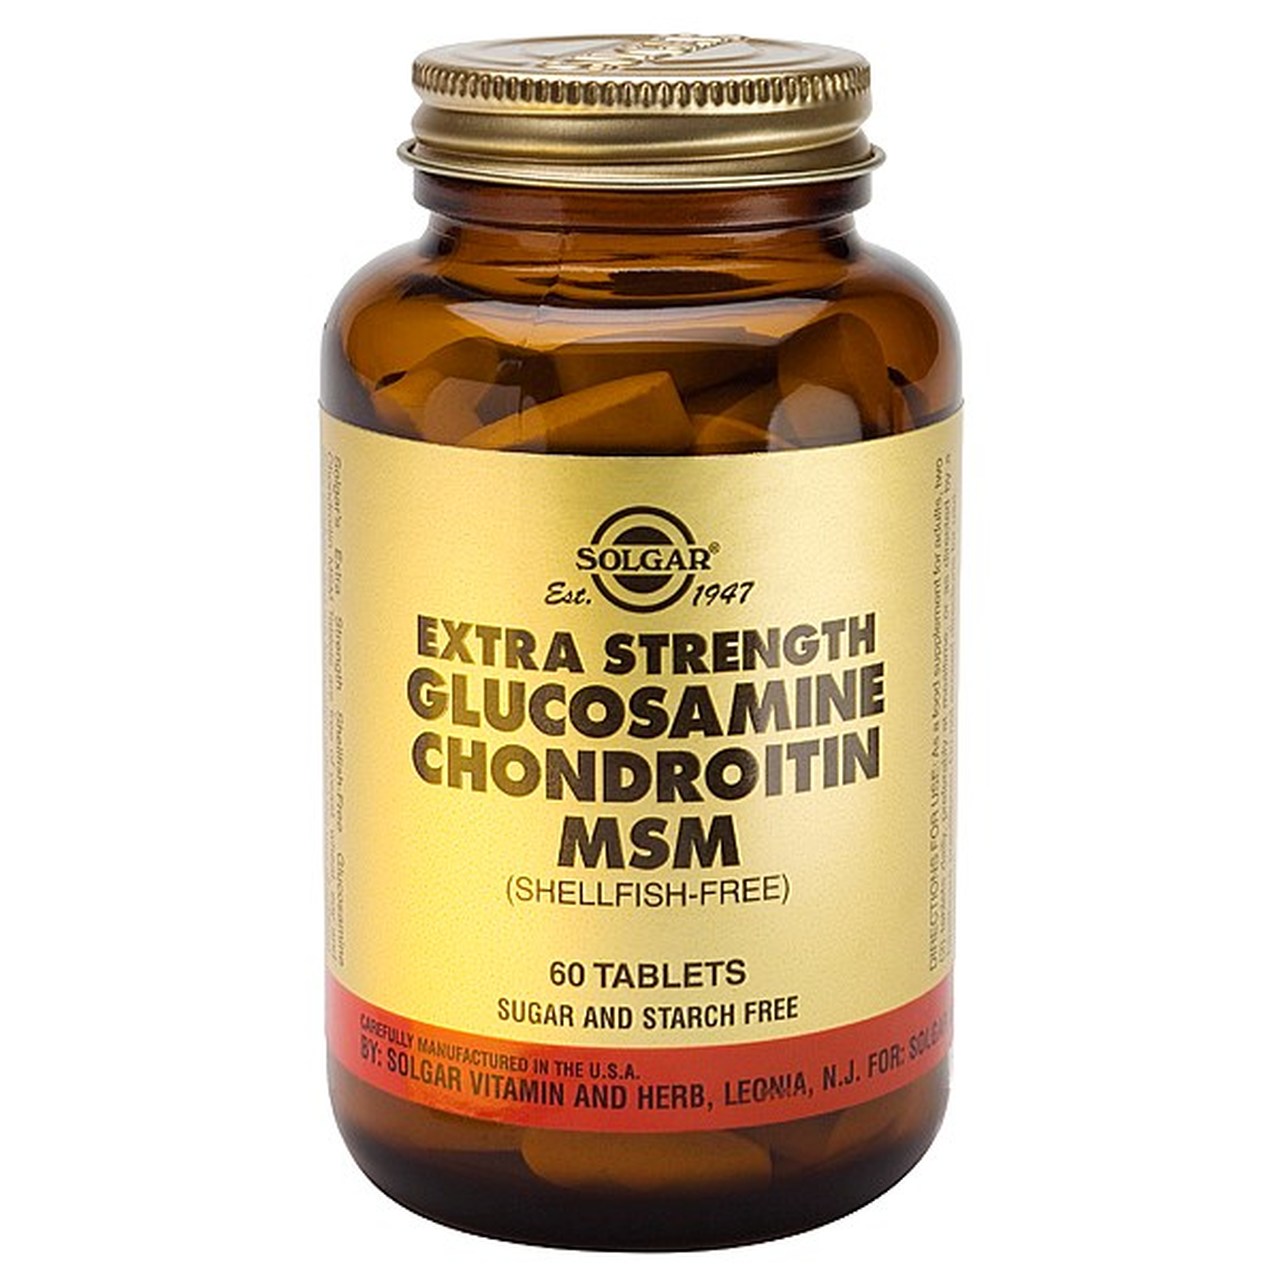 Solgar Glucosamine MSM Chondroitin Extra Strength 60 Tablets